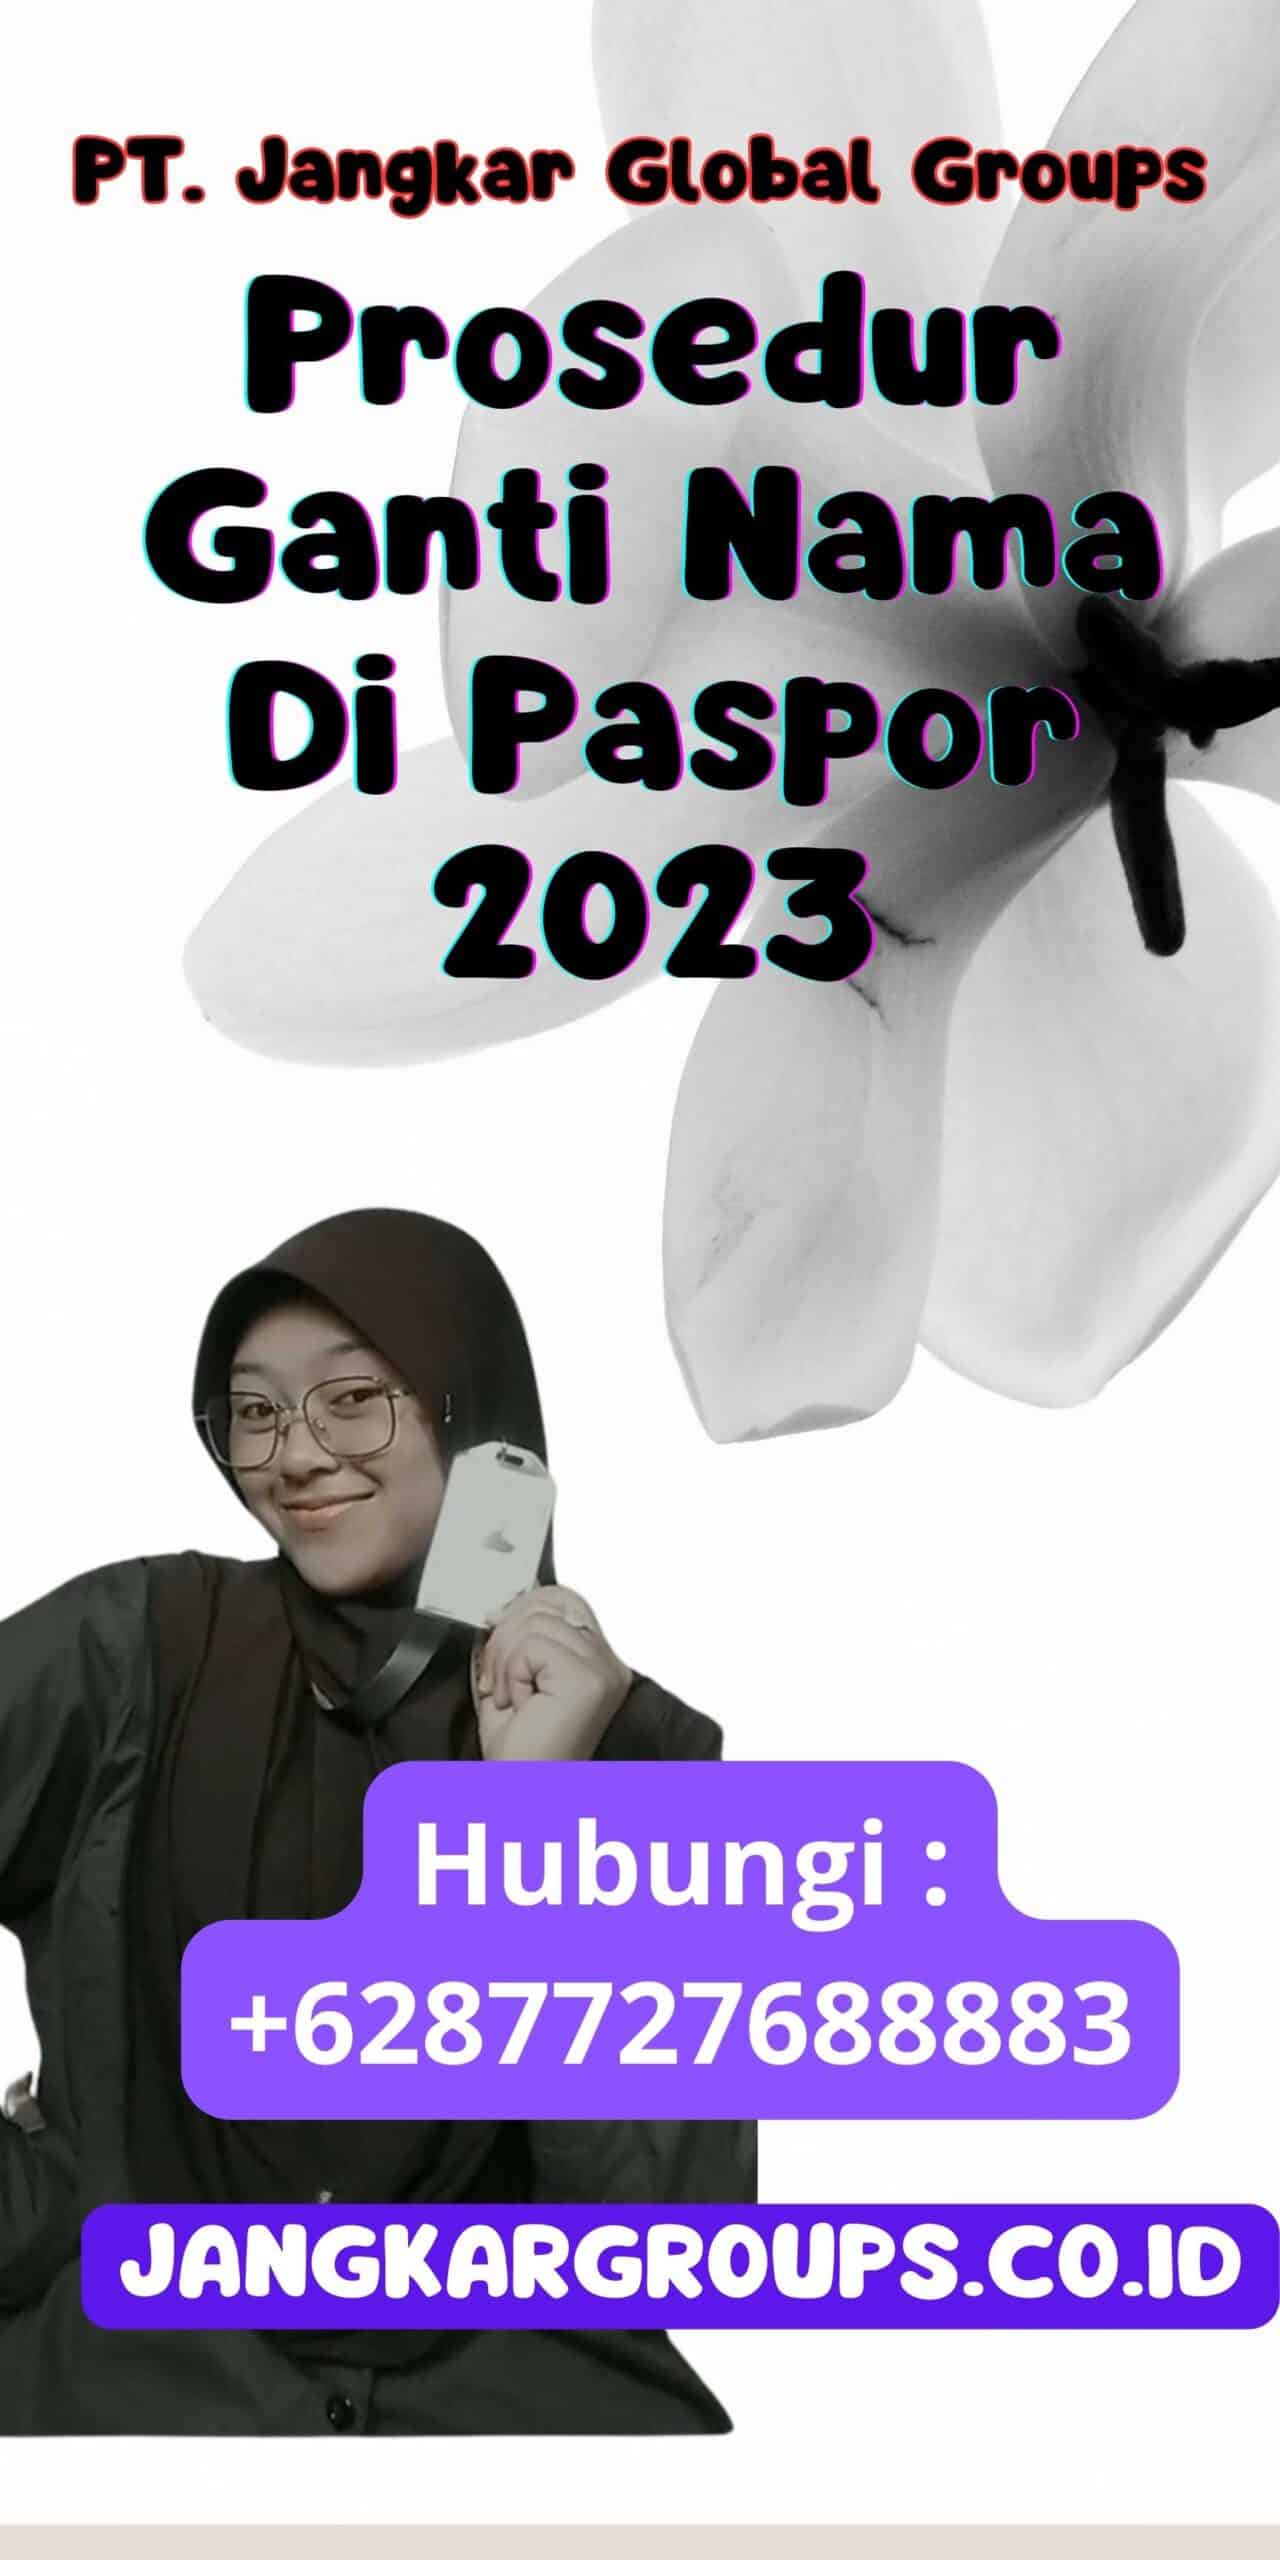 Prosedur Ganti Nama Di Paspor 2023